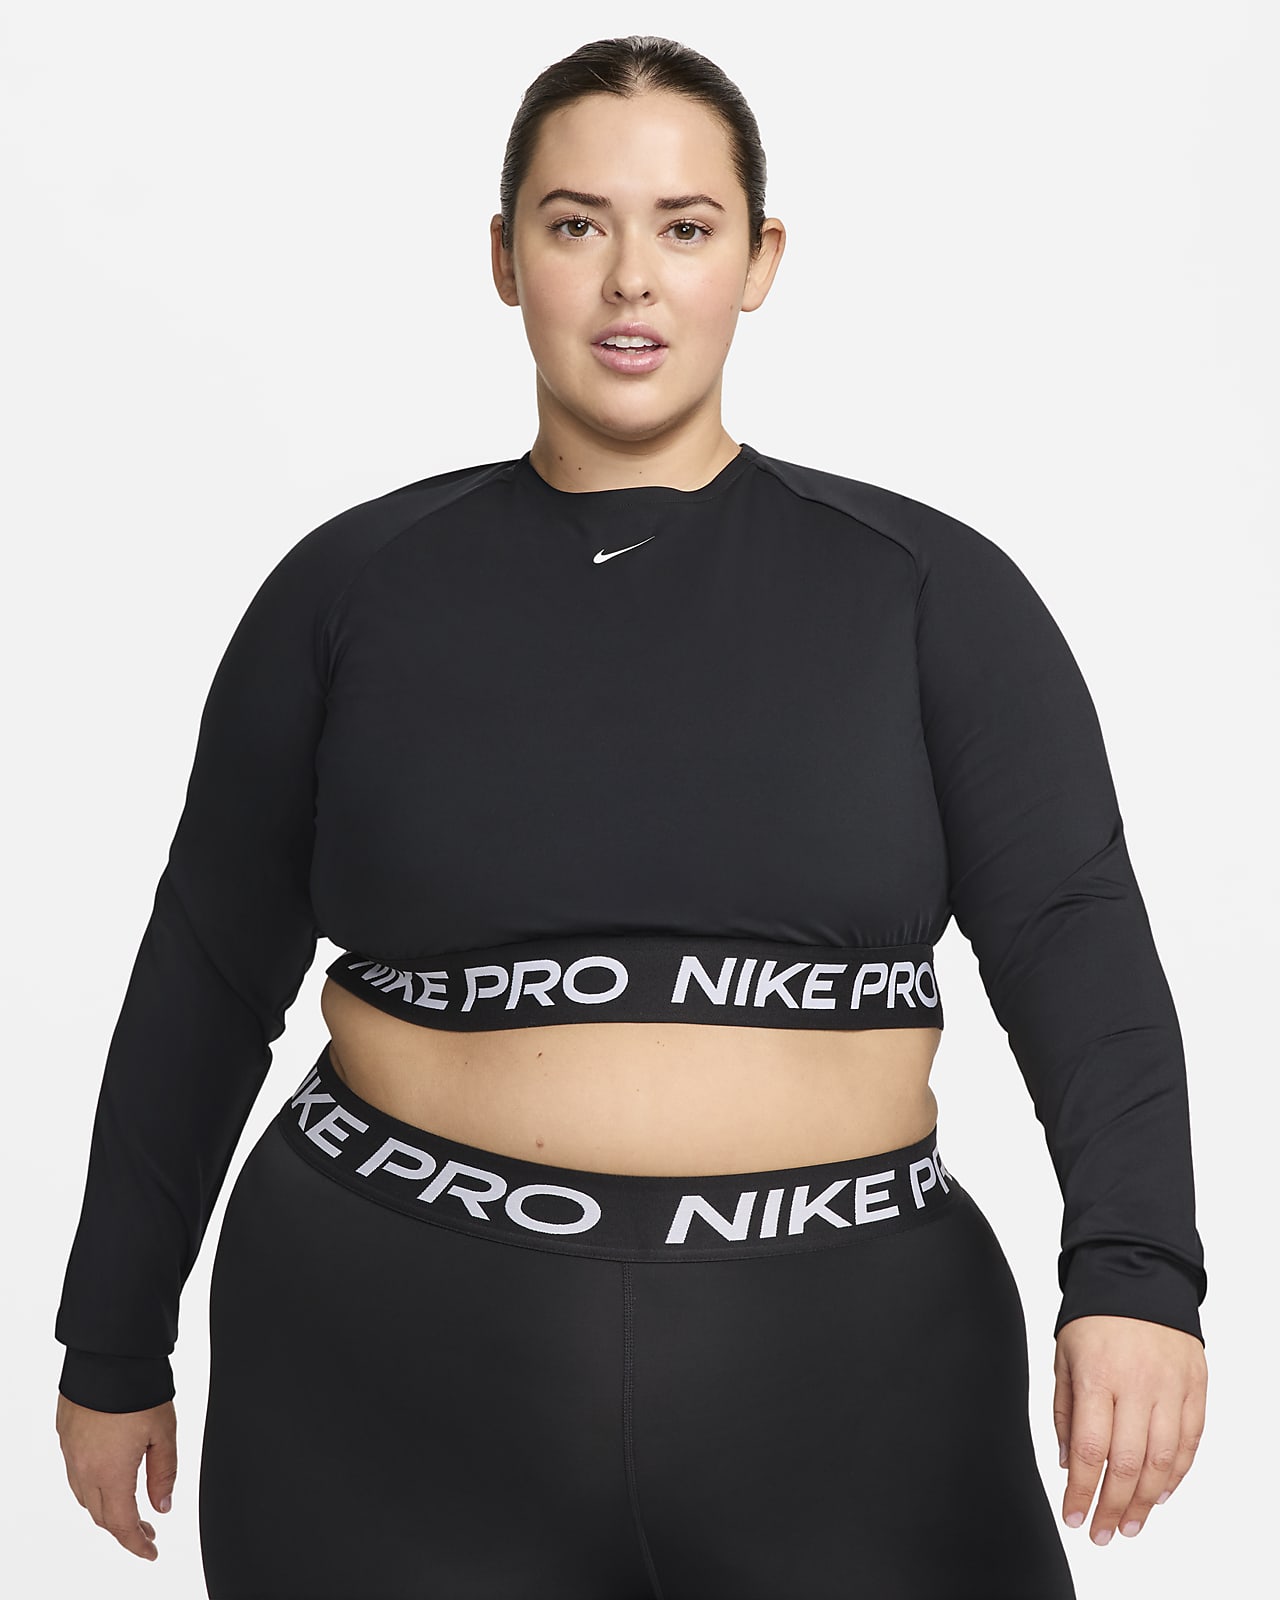 Nike Pro Women's Dri-FIT Cropped Long-Sleeve Top (Plus Size)